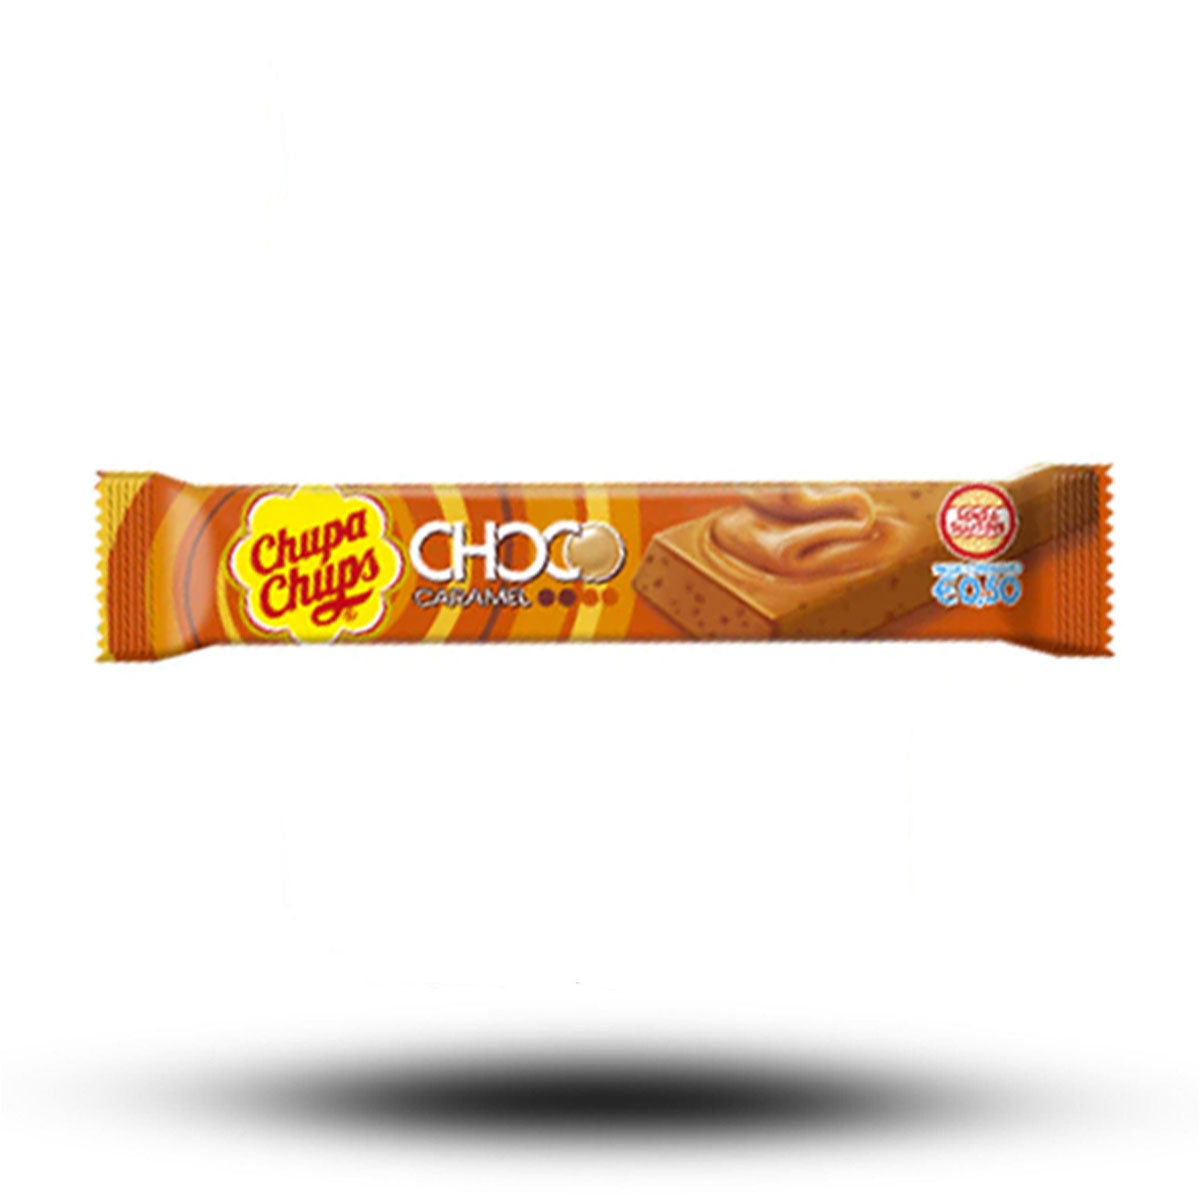 Chupa Chups Choco Snack Caramel 20g